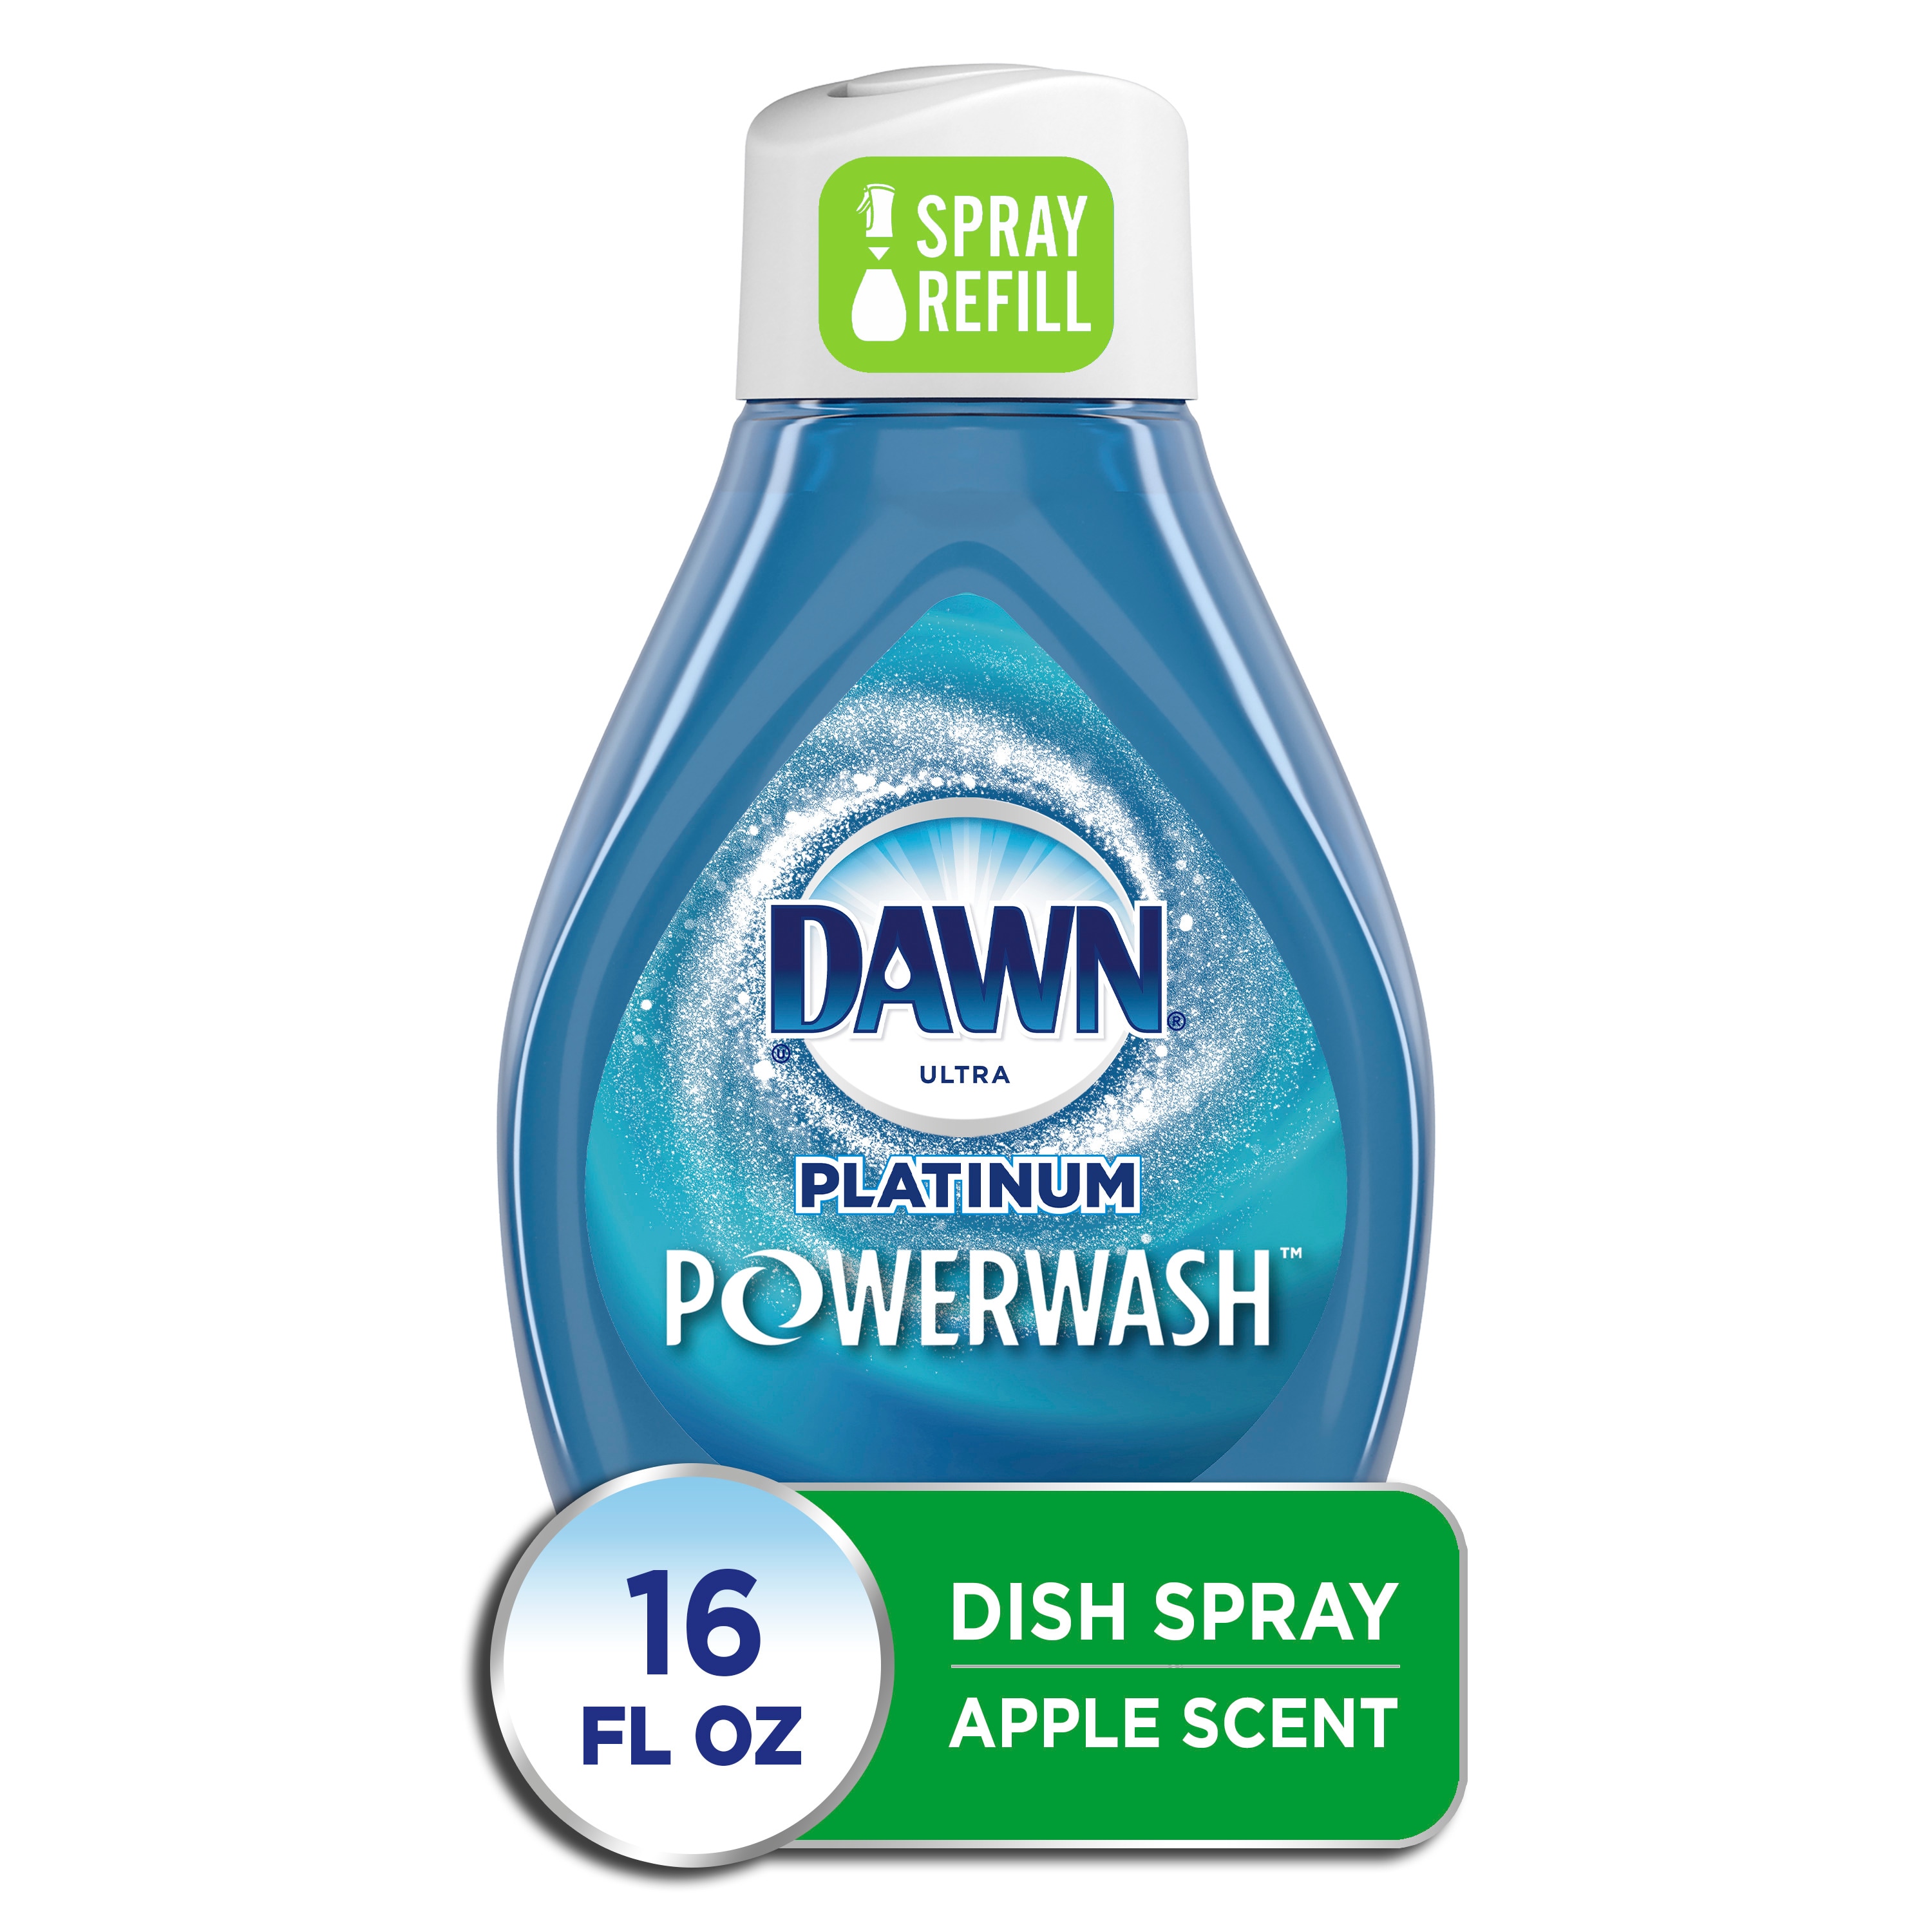 Real Review of My Dawn Platinum Powerwash Cleaner 